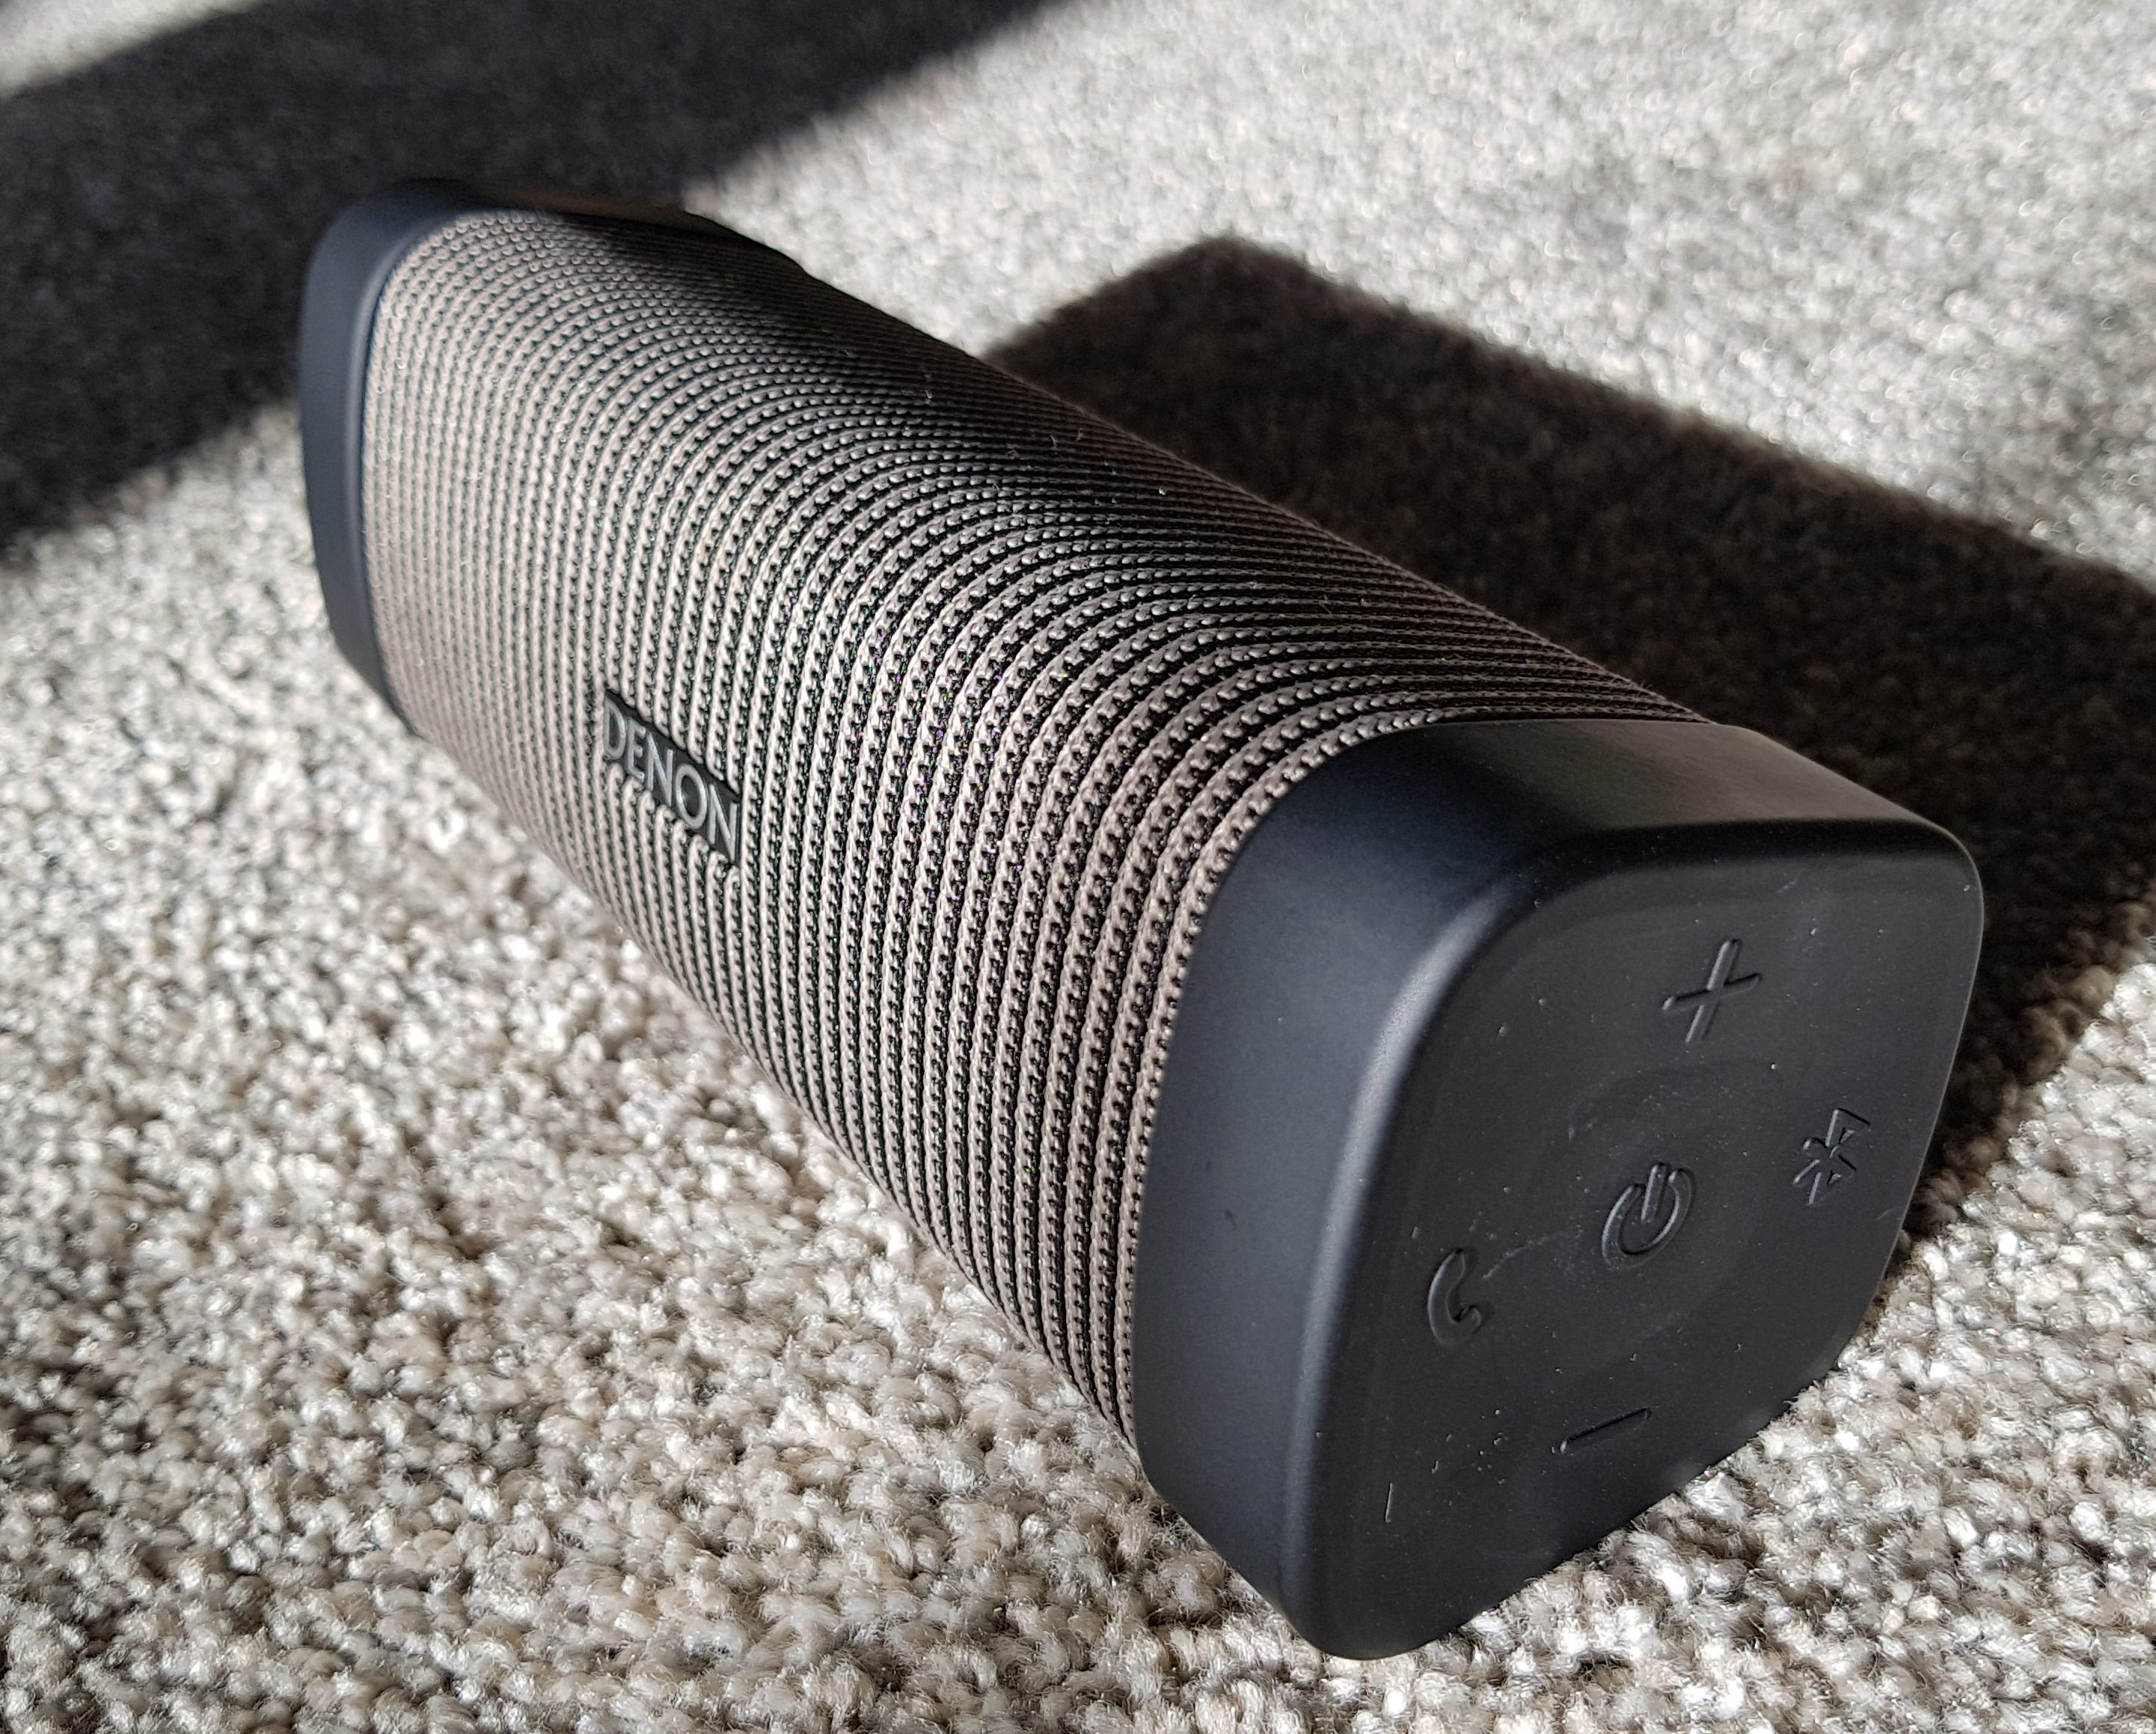 Denon Envaya DSB-50BT Bluetooth Speaker - Review - Coolsmartphone